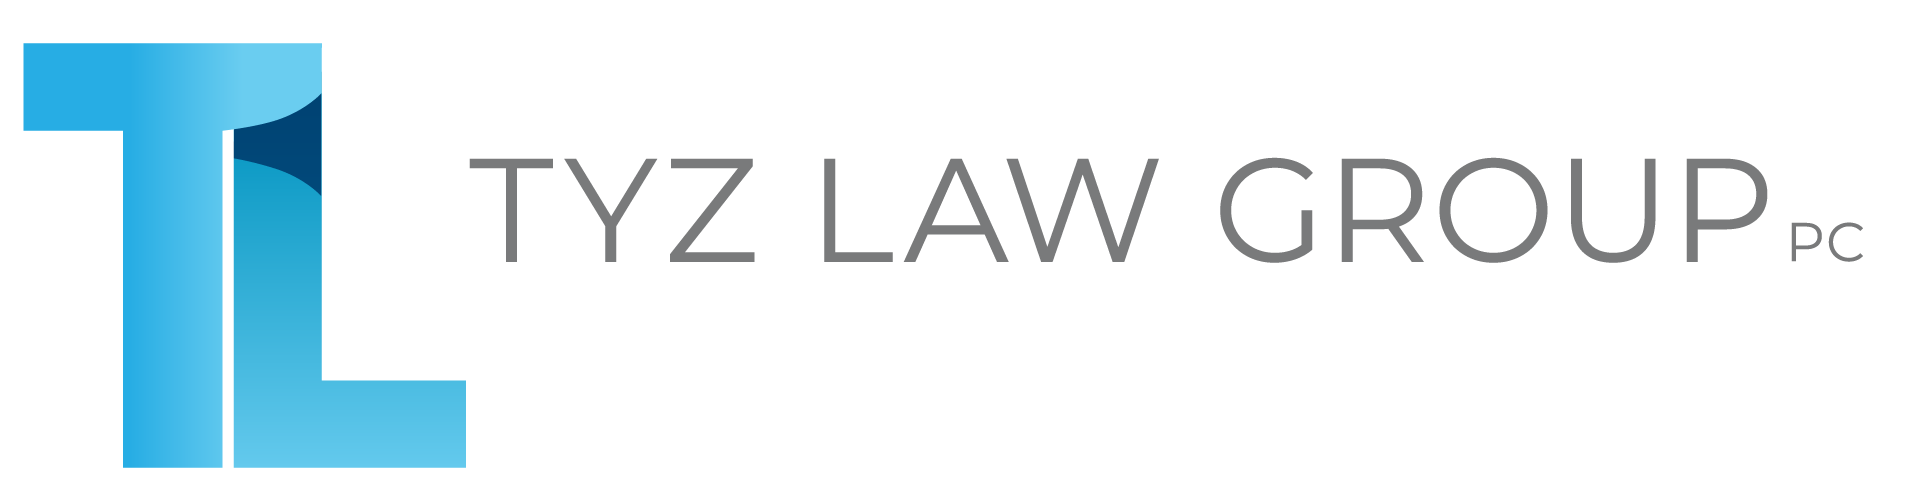 Tyz Law Group PC